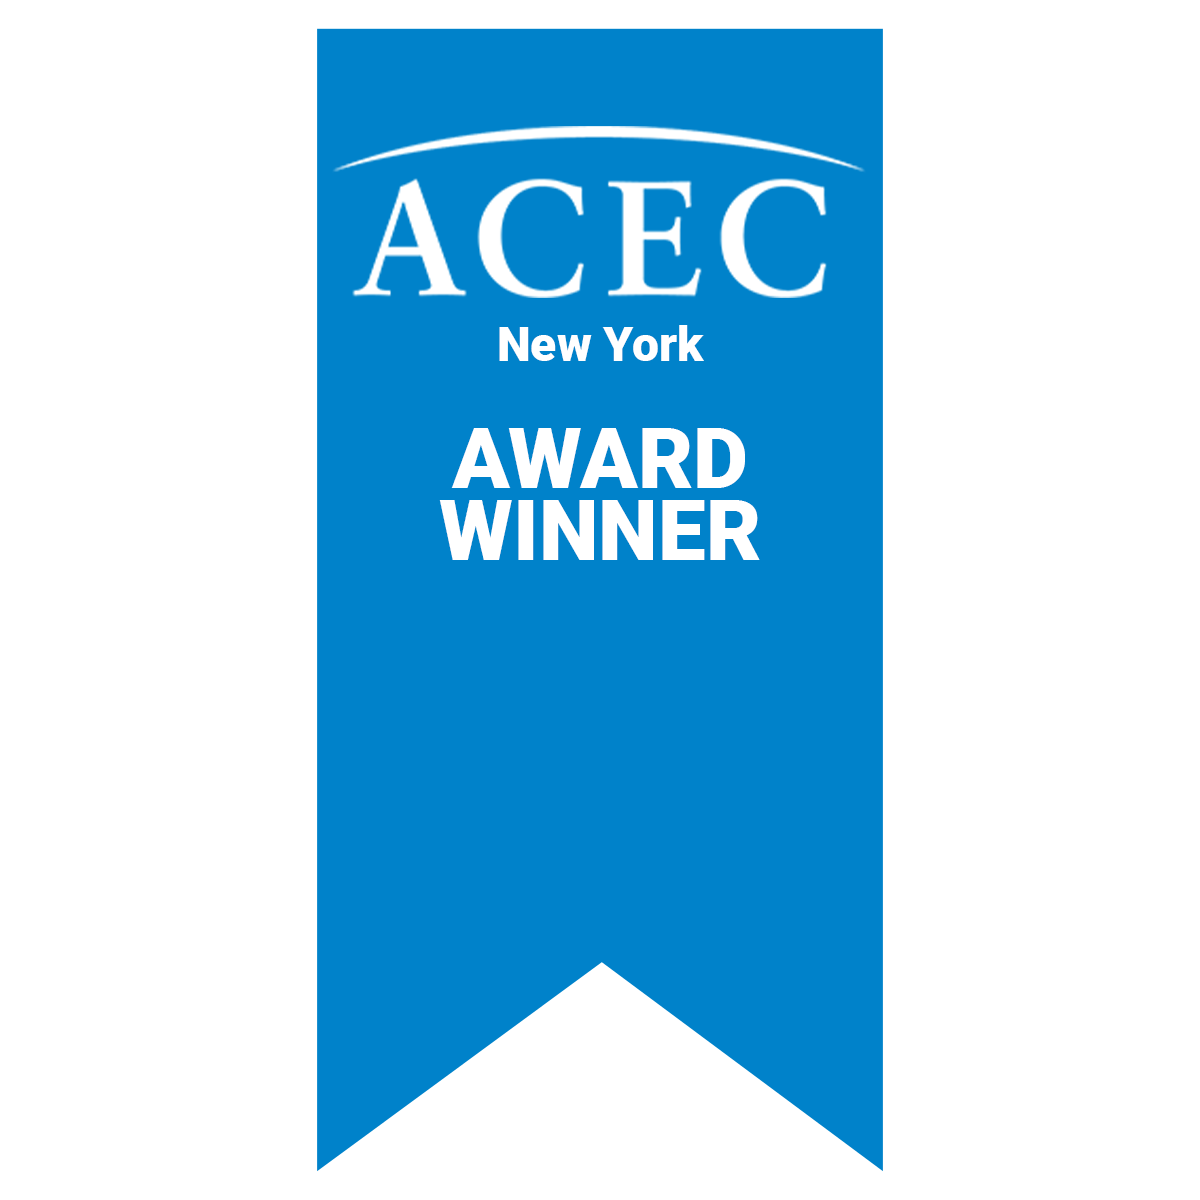 ACEC New York Gold Award